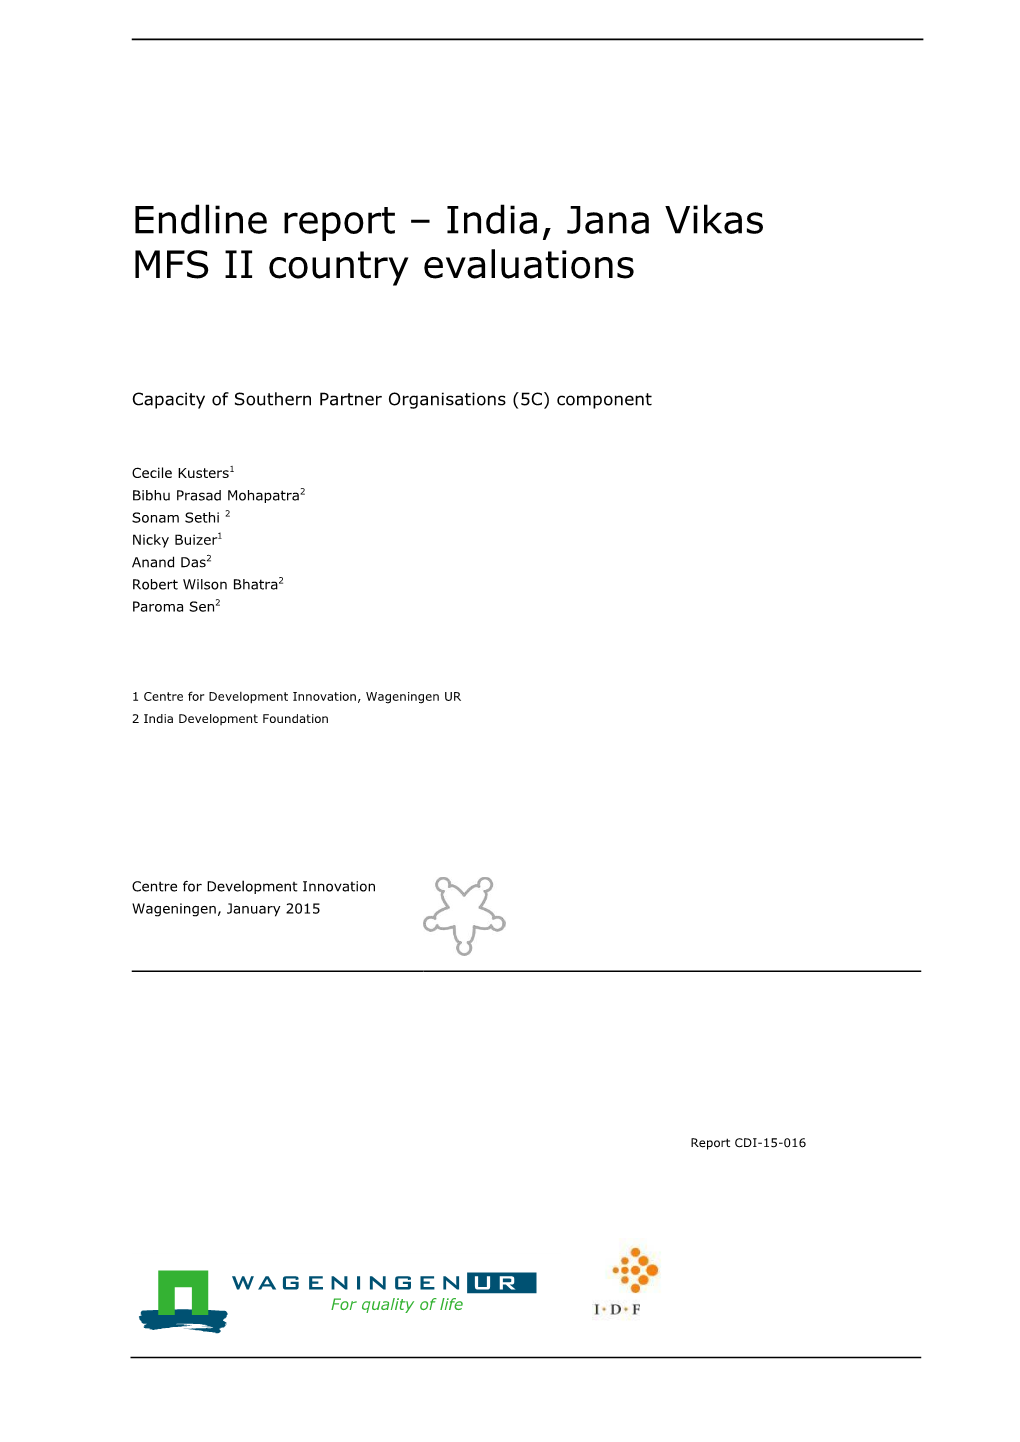 India, Jana Vikas MFS II Country Evaluations